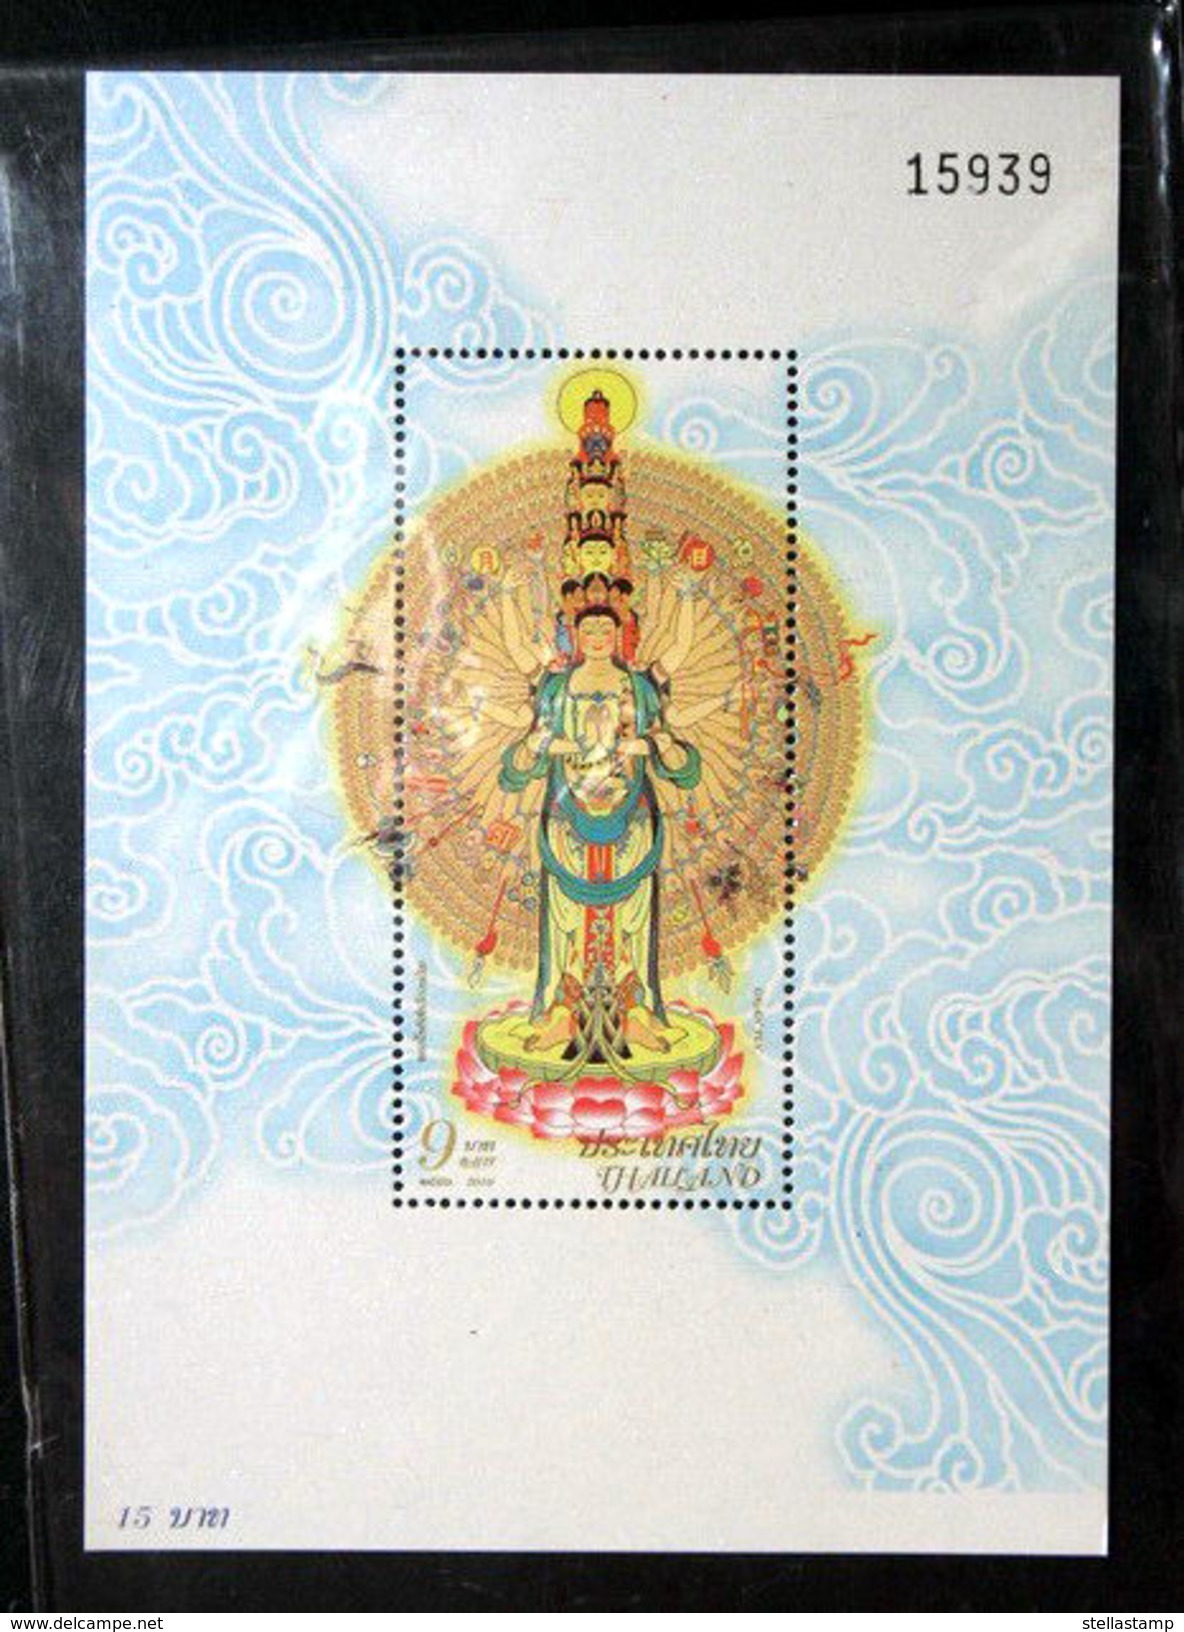 Thailand Stamp SS 2010 Guan Yin 2nd Series (5 Digits) - Thailand